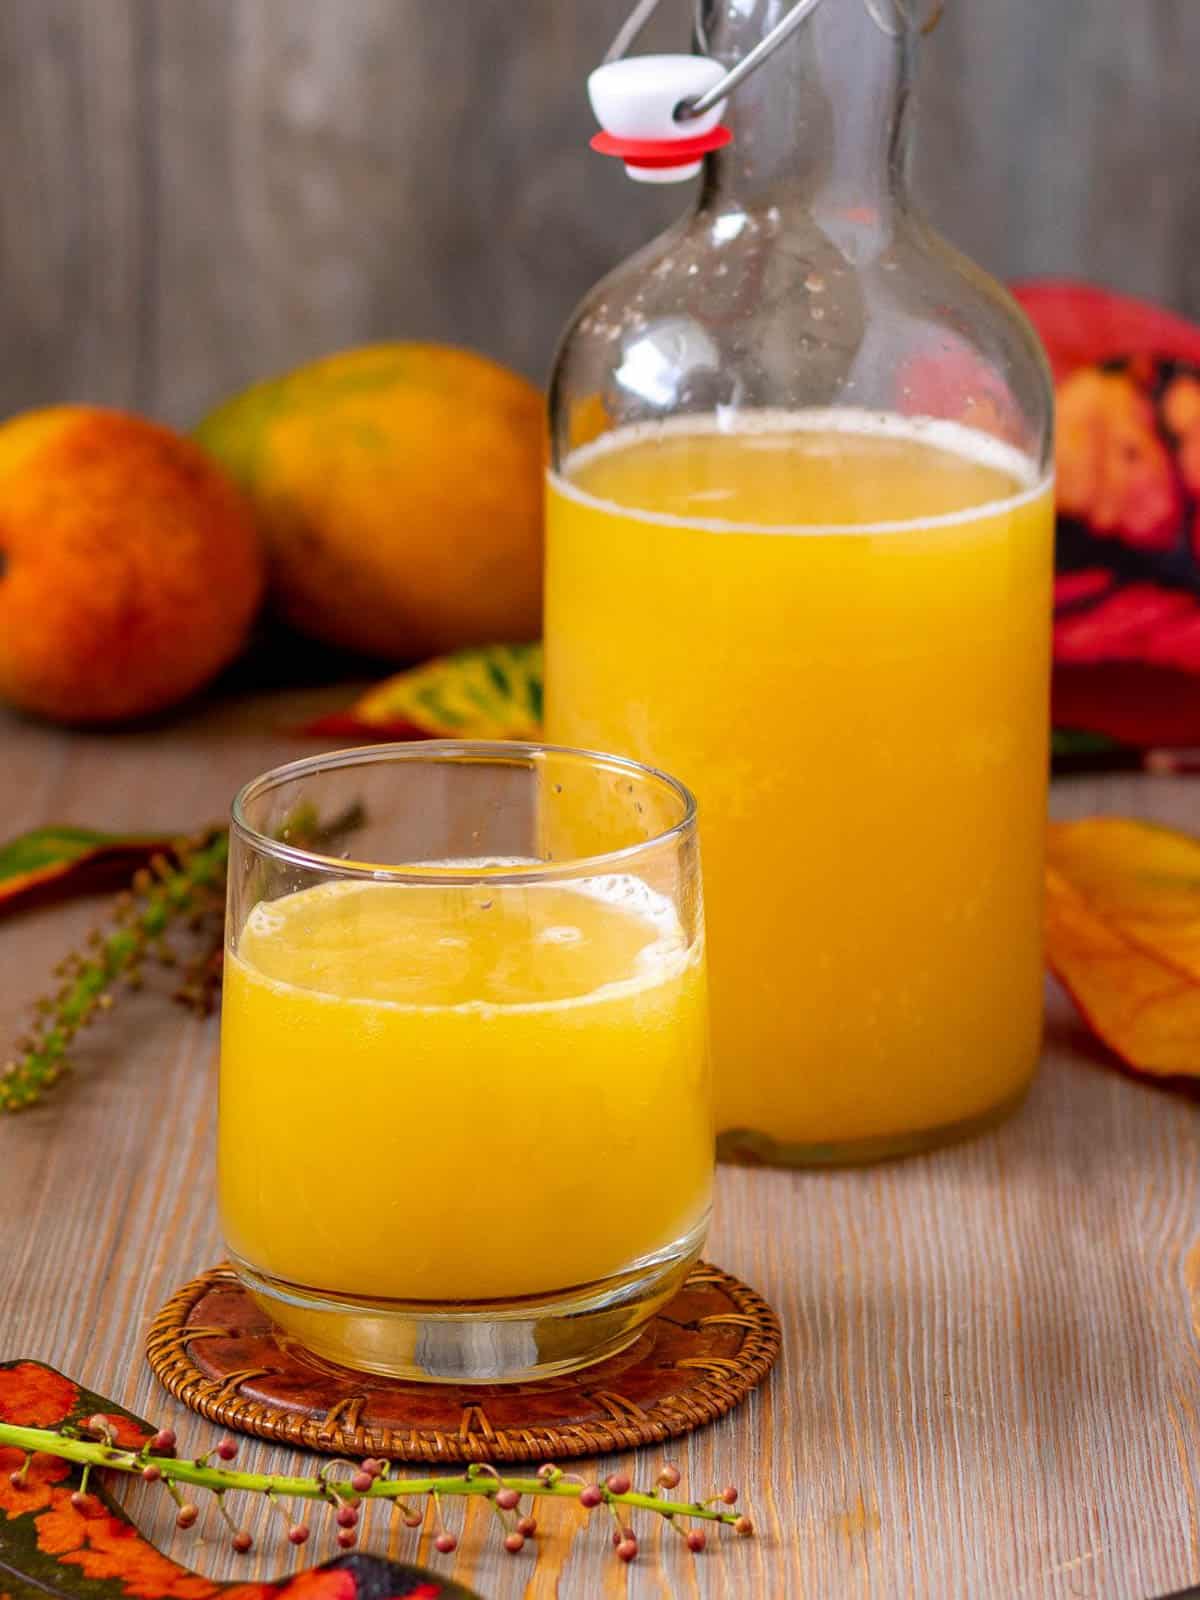 Homemade mango flavored kombucha with natural fermentation and probiotics.